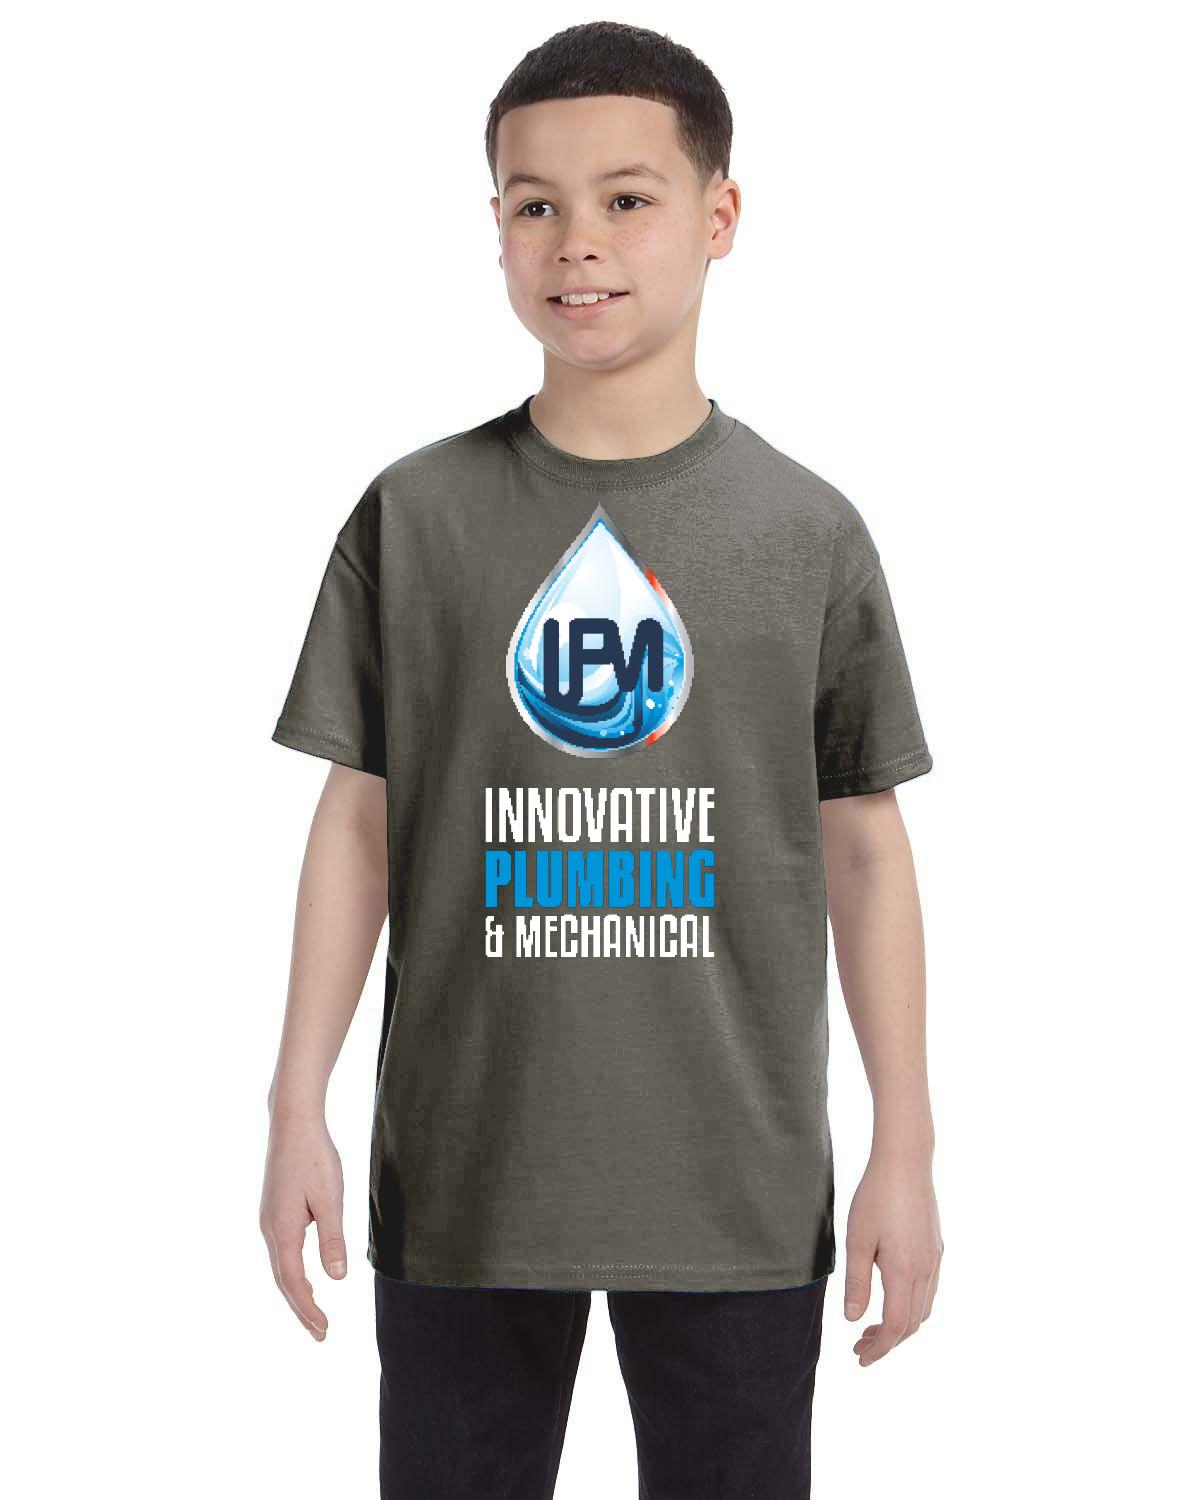 Innovative Plumbing and Mechanical Kid's T-Shirt